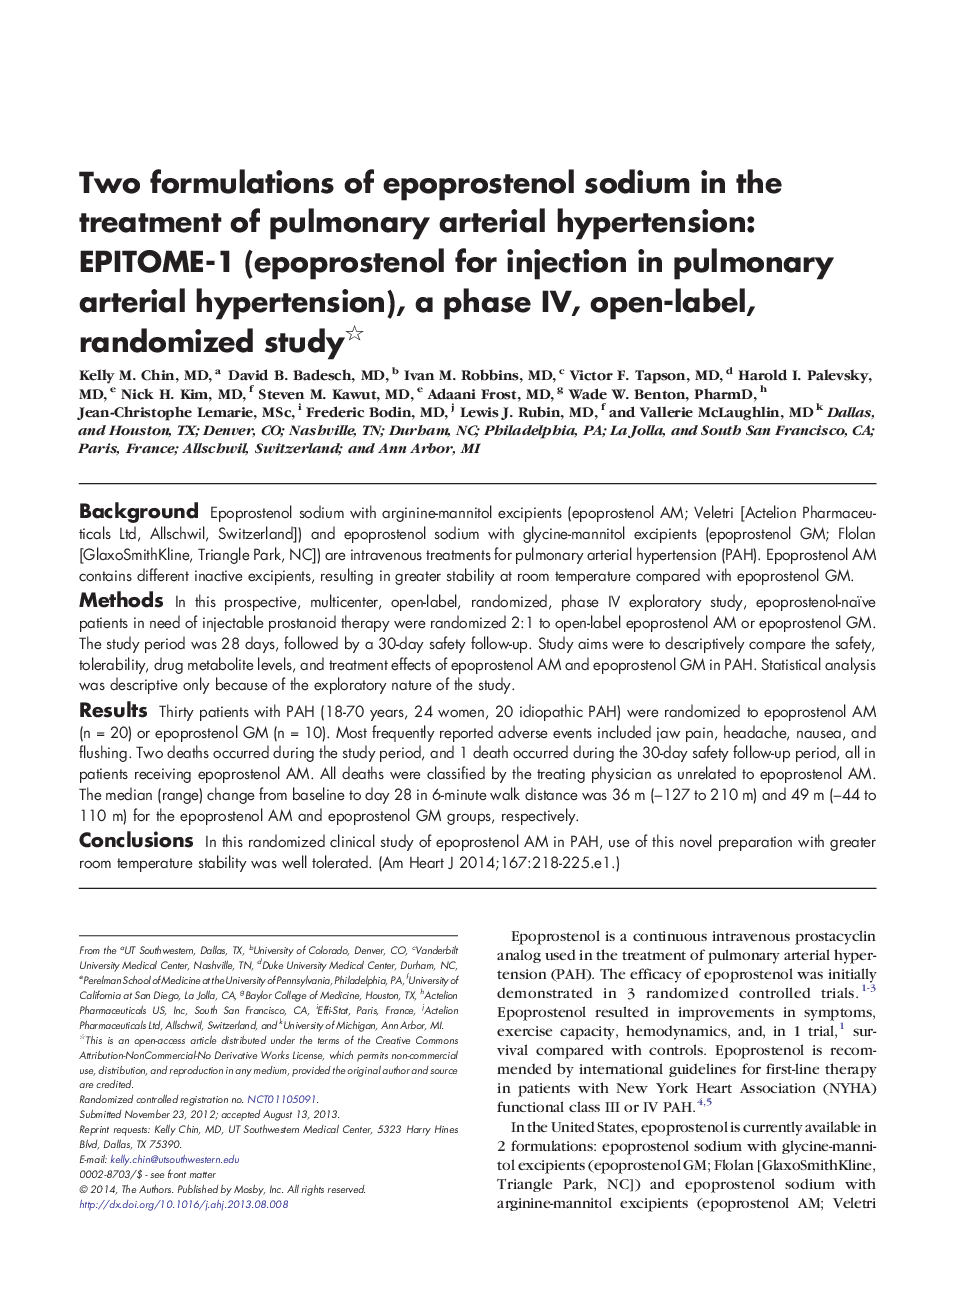 Two formulations of epoprostenol sodium in the treatment of pulmonary arterial hypertension: EPITOME-1 (epoprostenol for injection in pulmonary arterial hypertension), a phase IV, open-label, randomized study